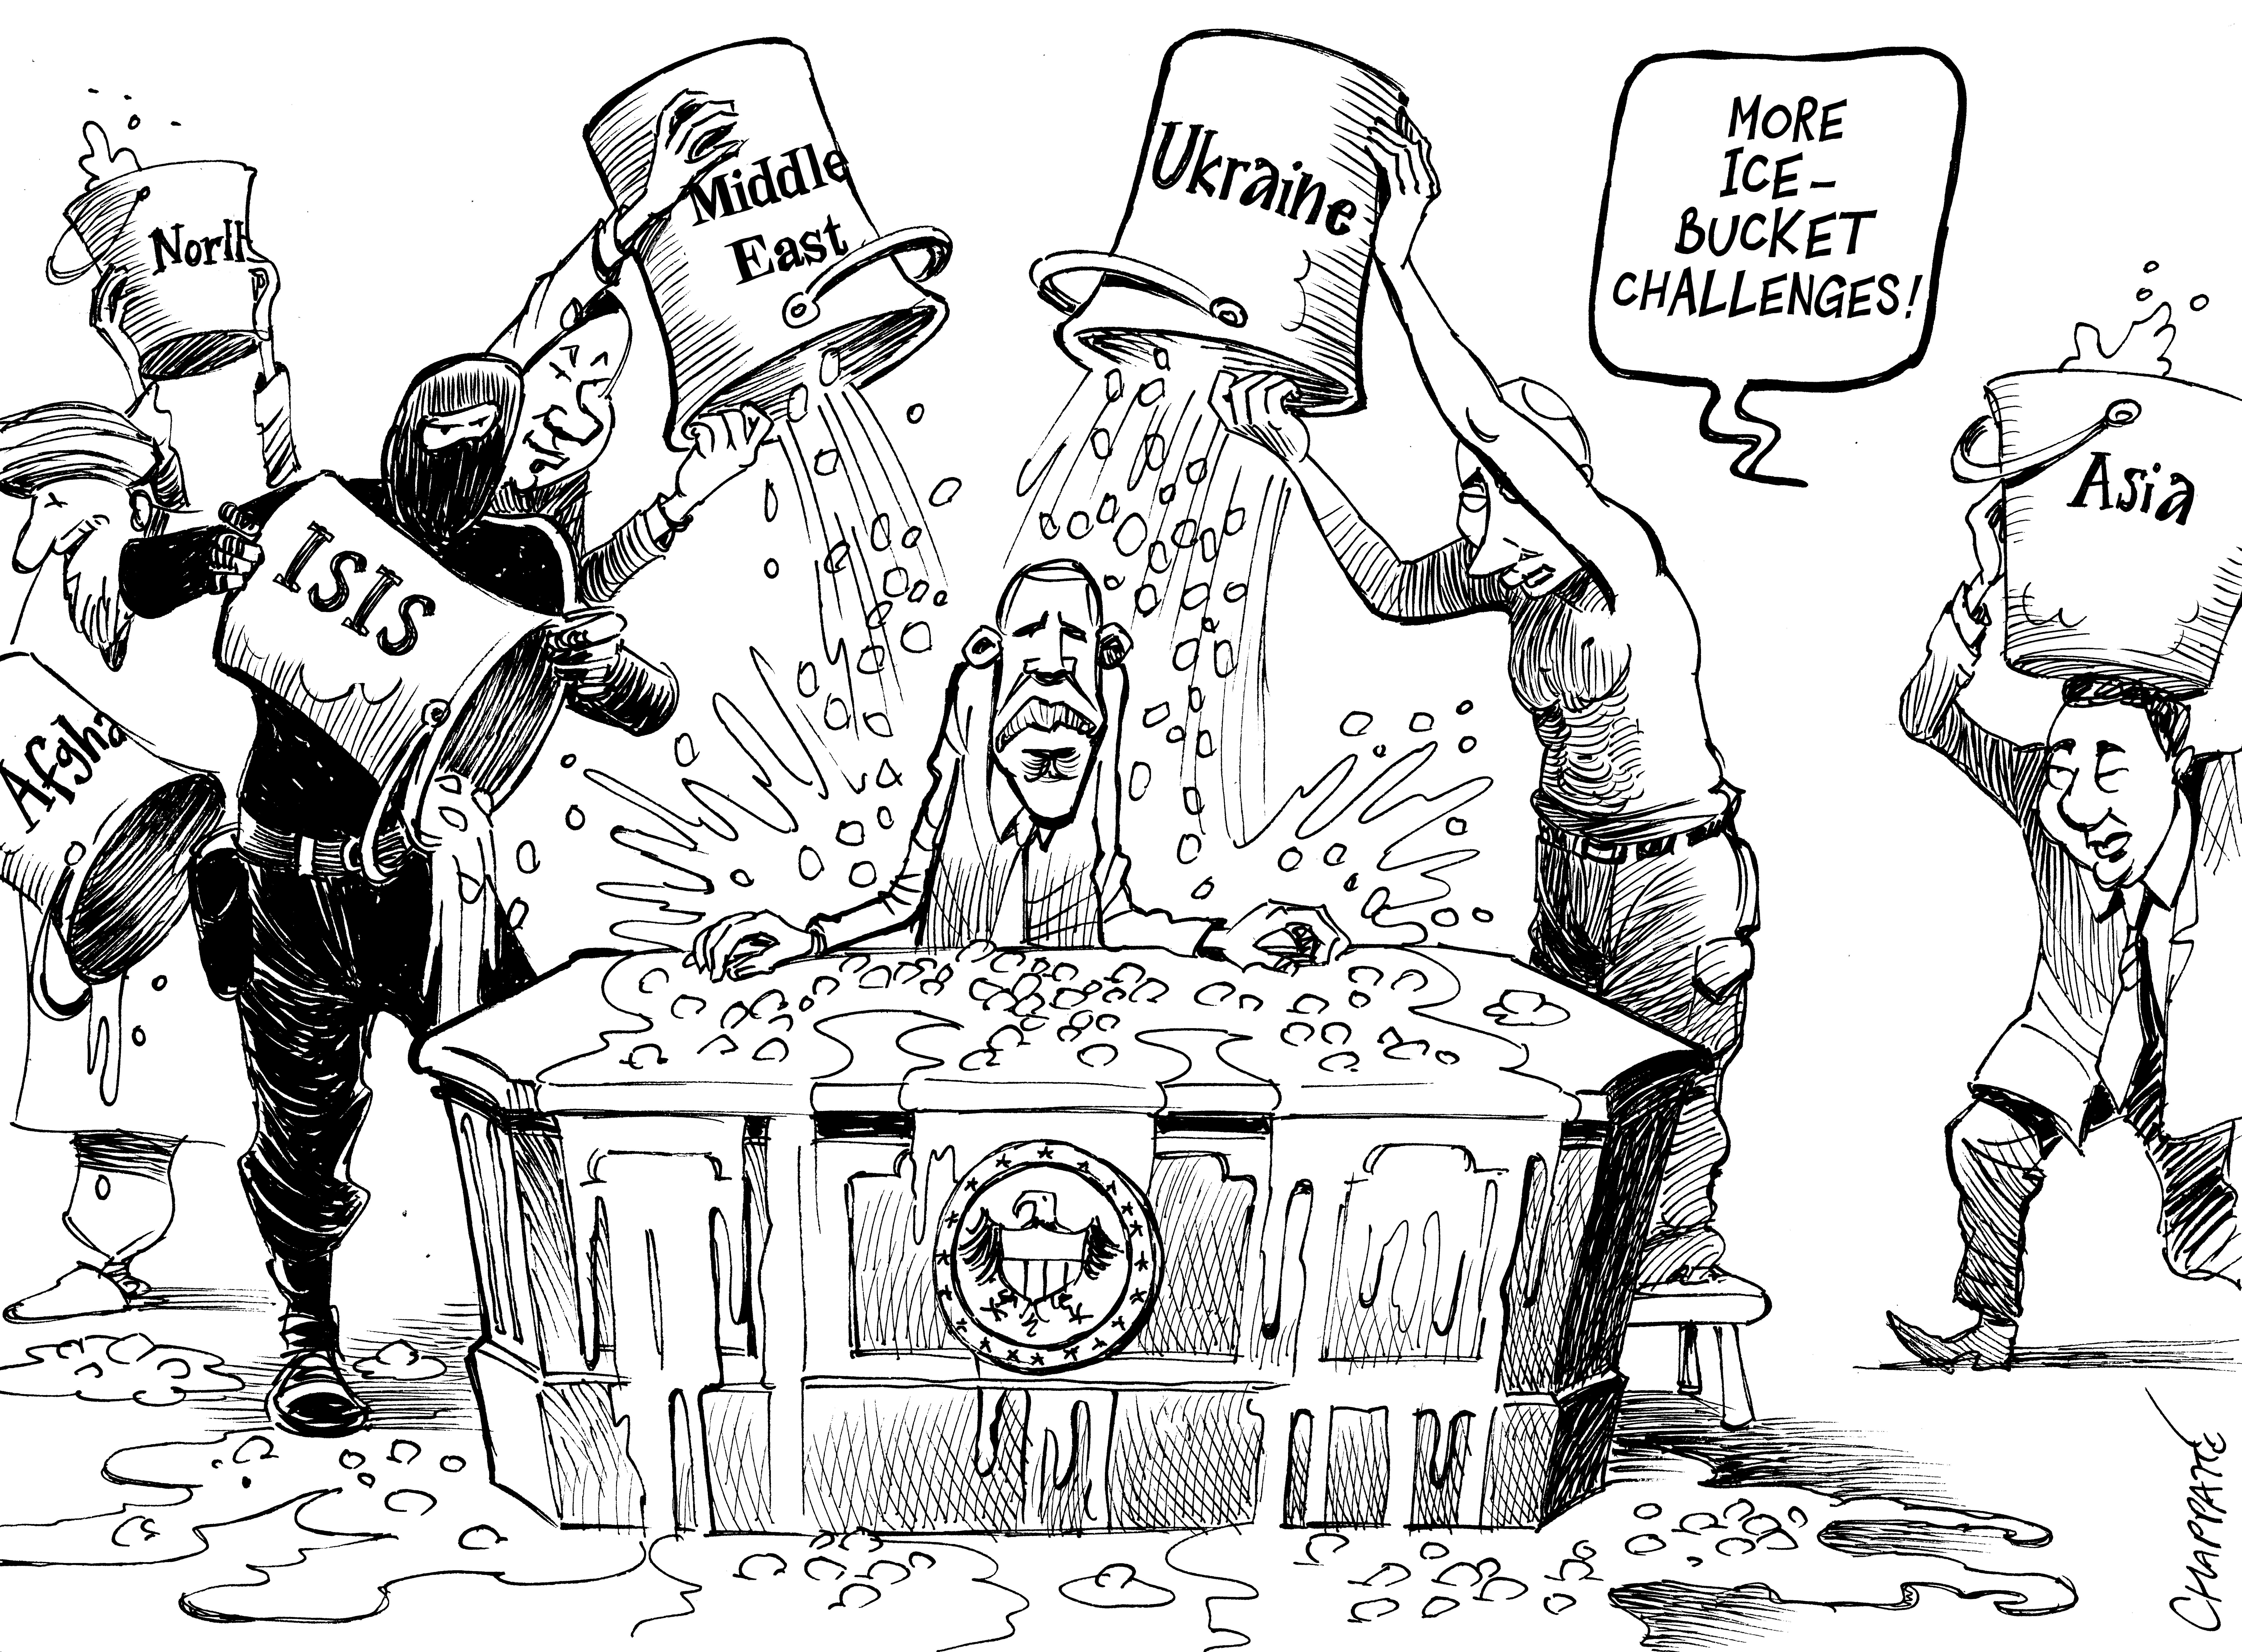 Obama Challenged